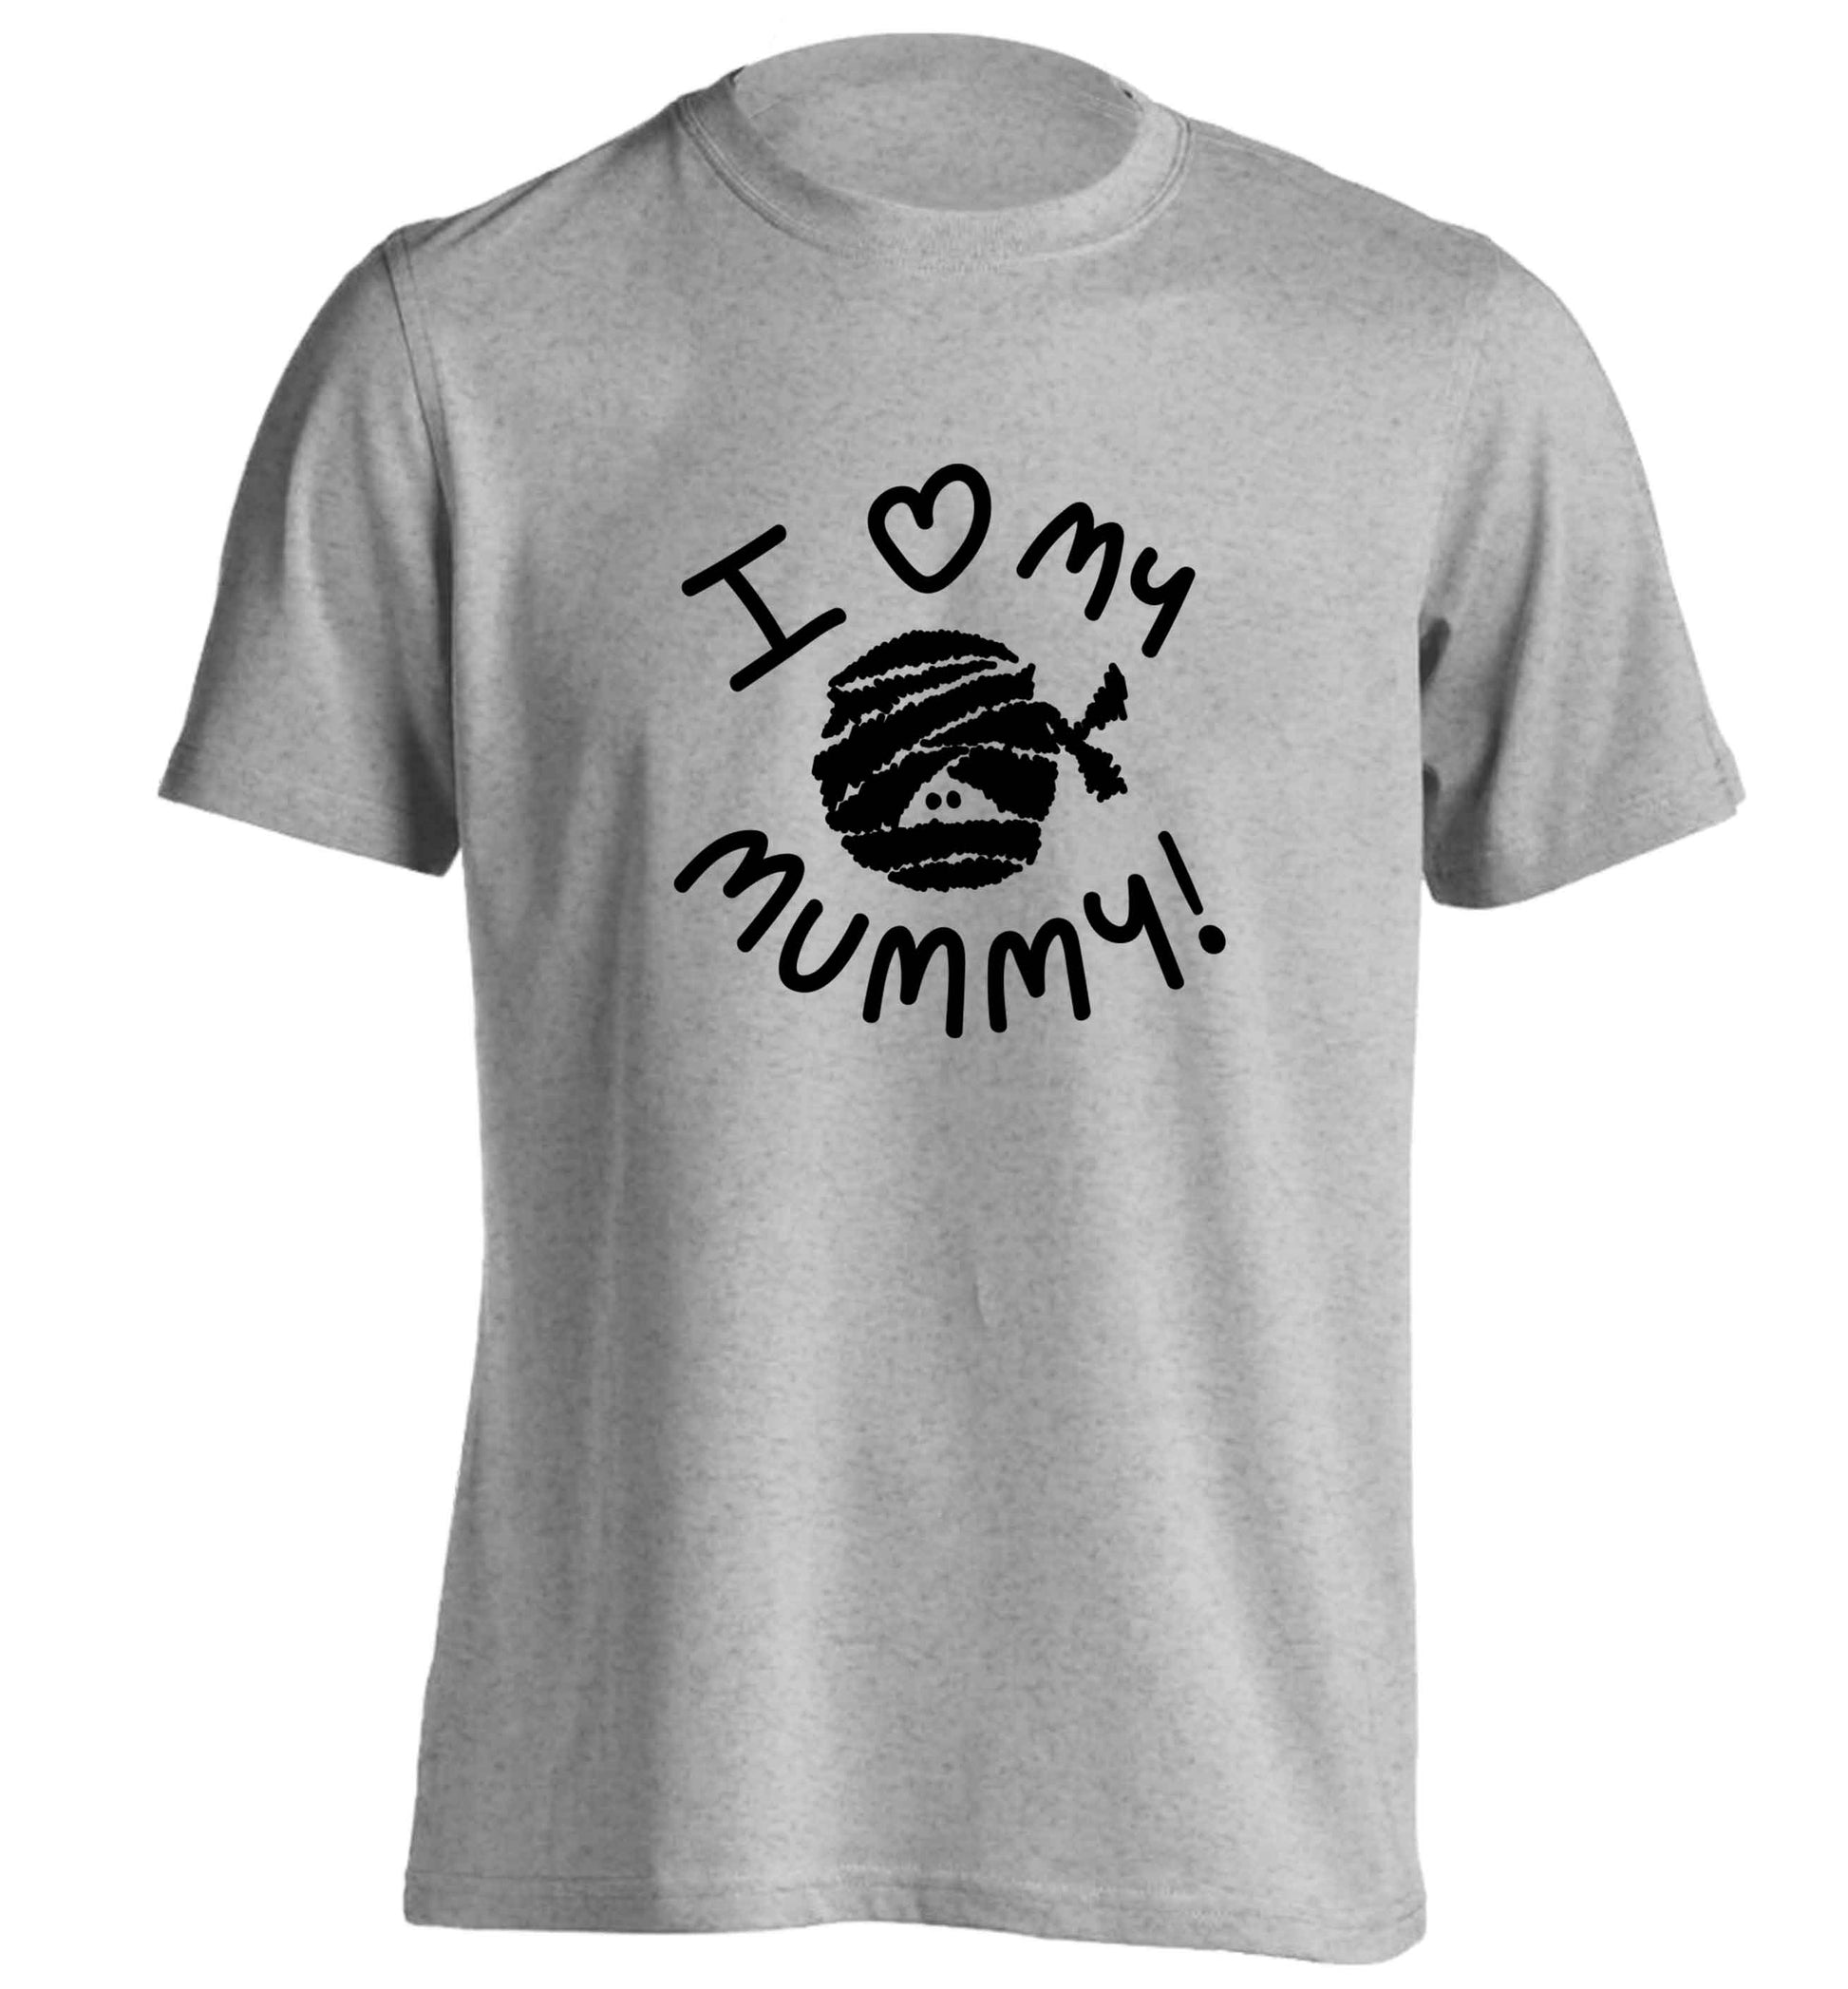 I love my mummy halloween pun adults unisex grey Tshirt 2XL